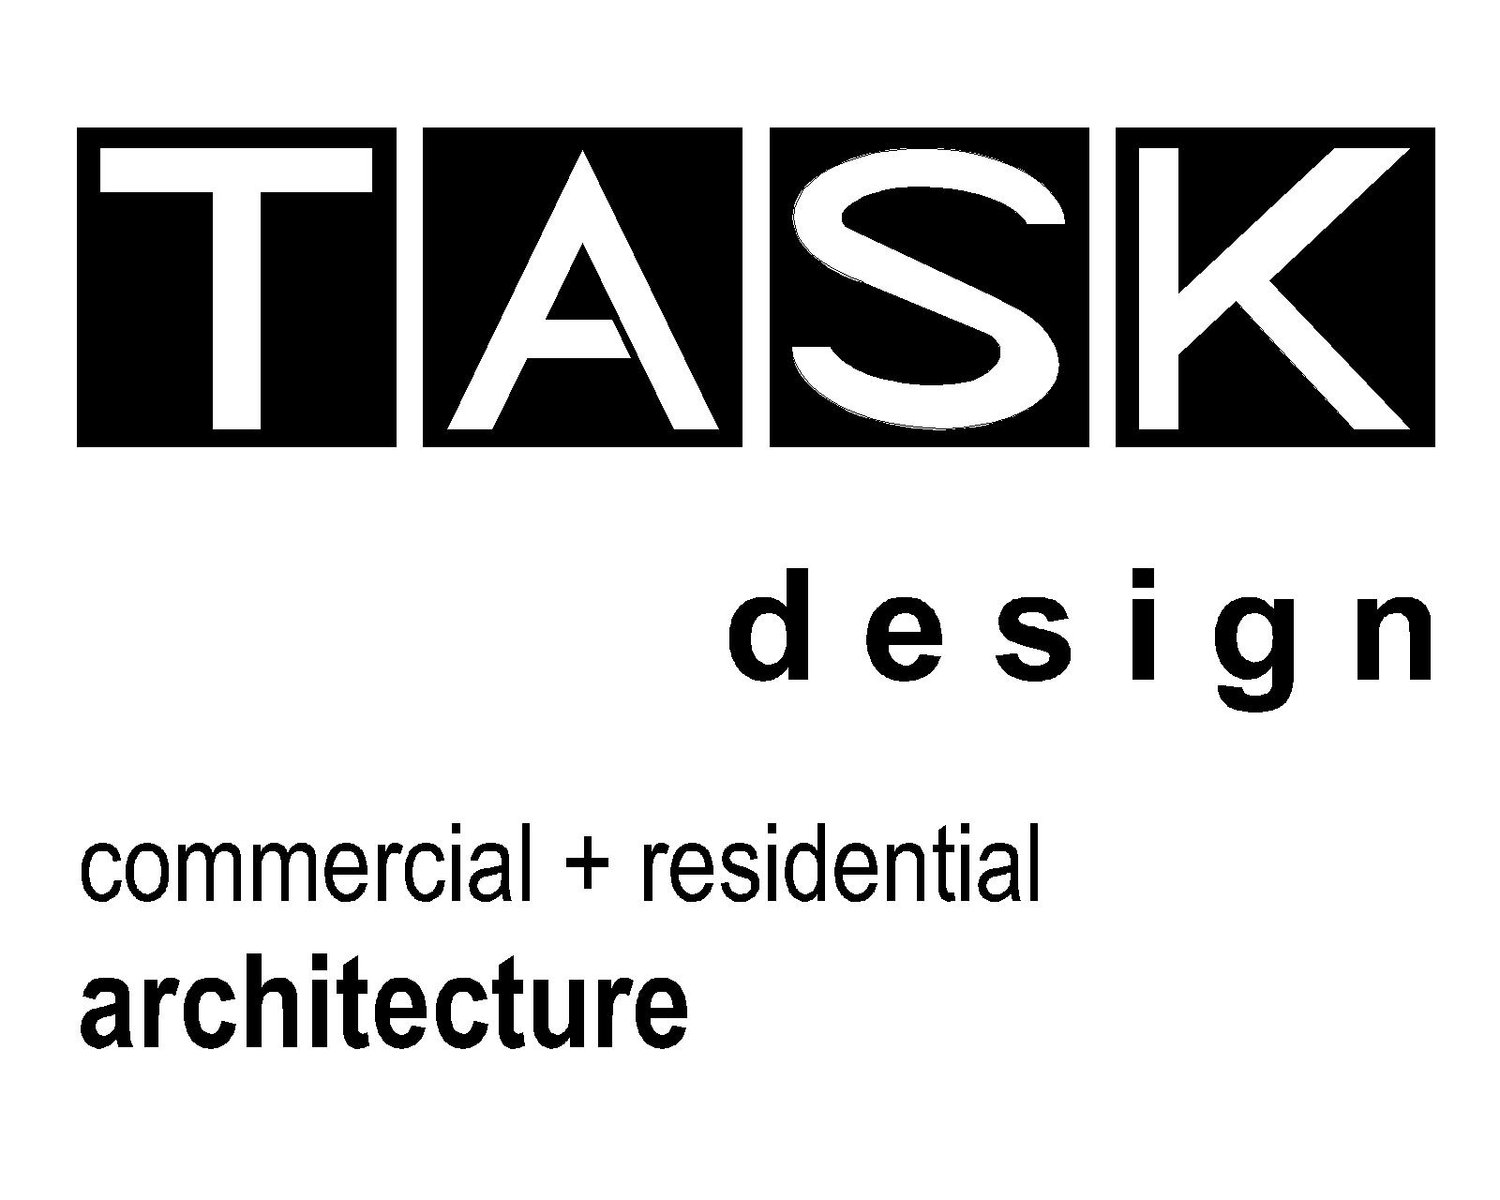 task design